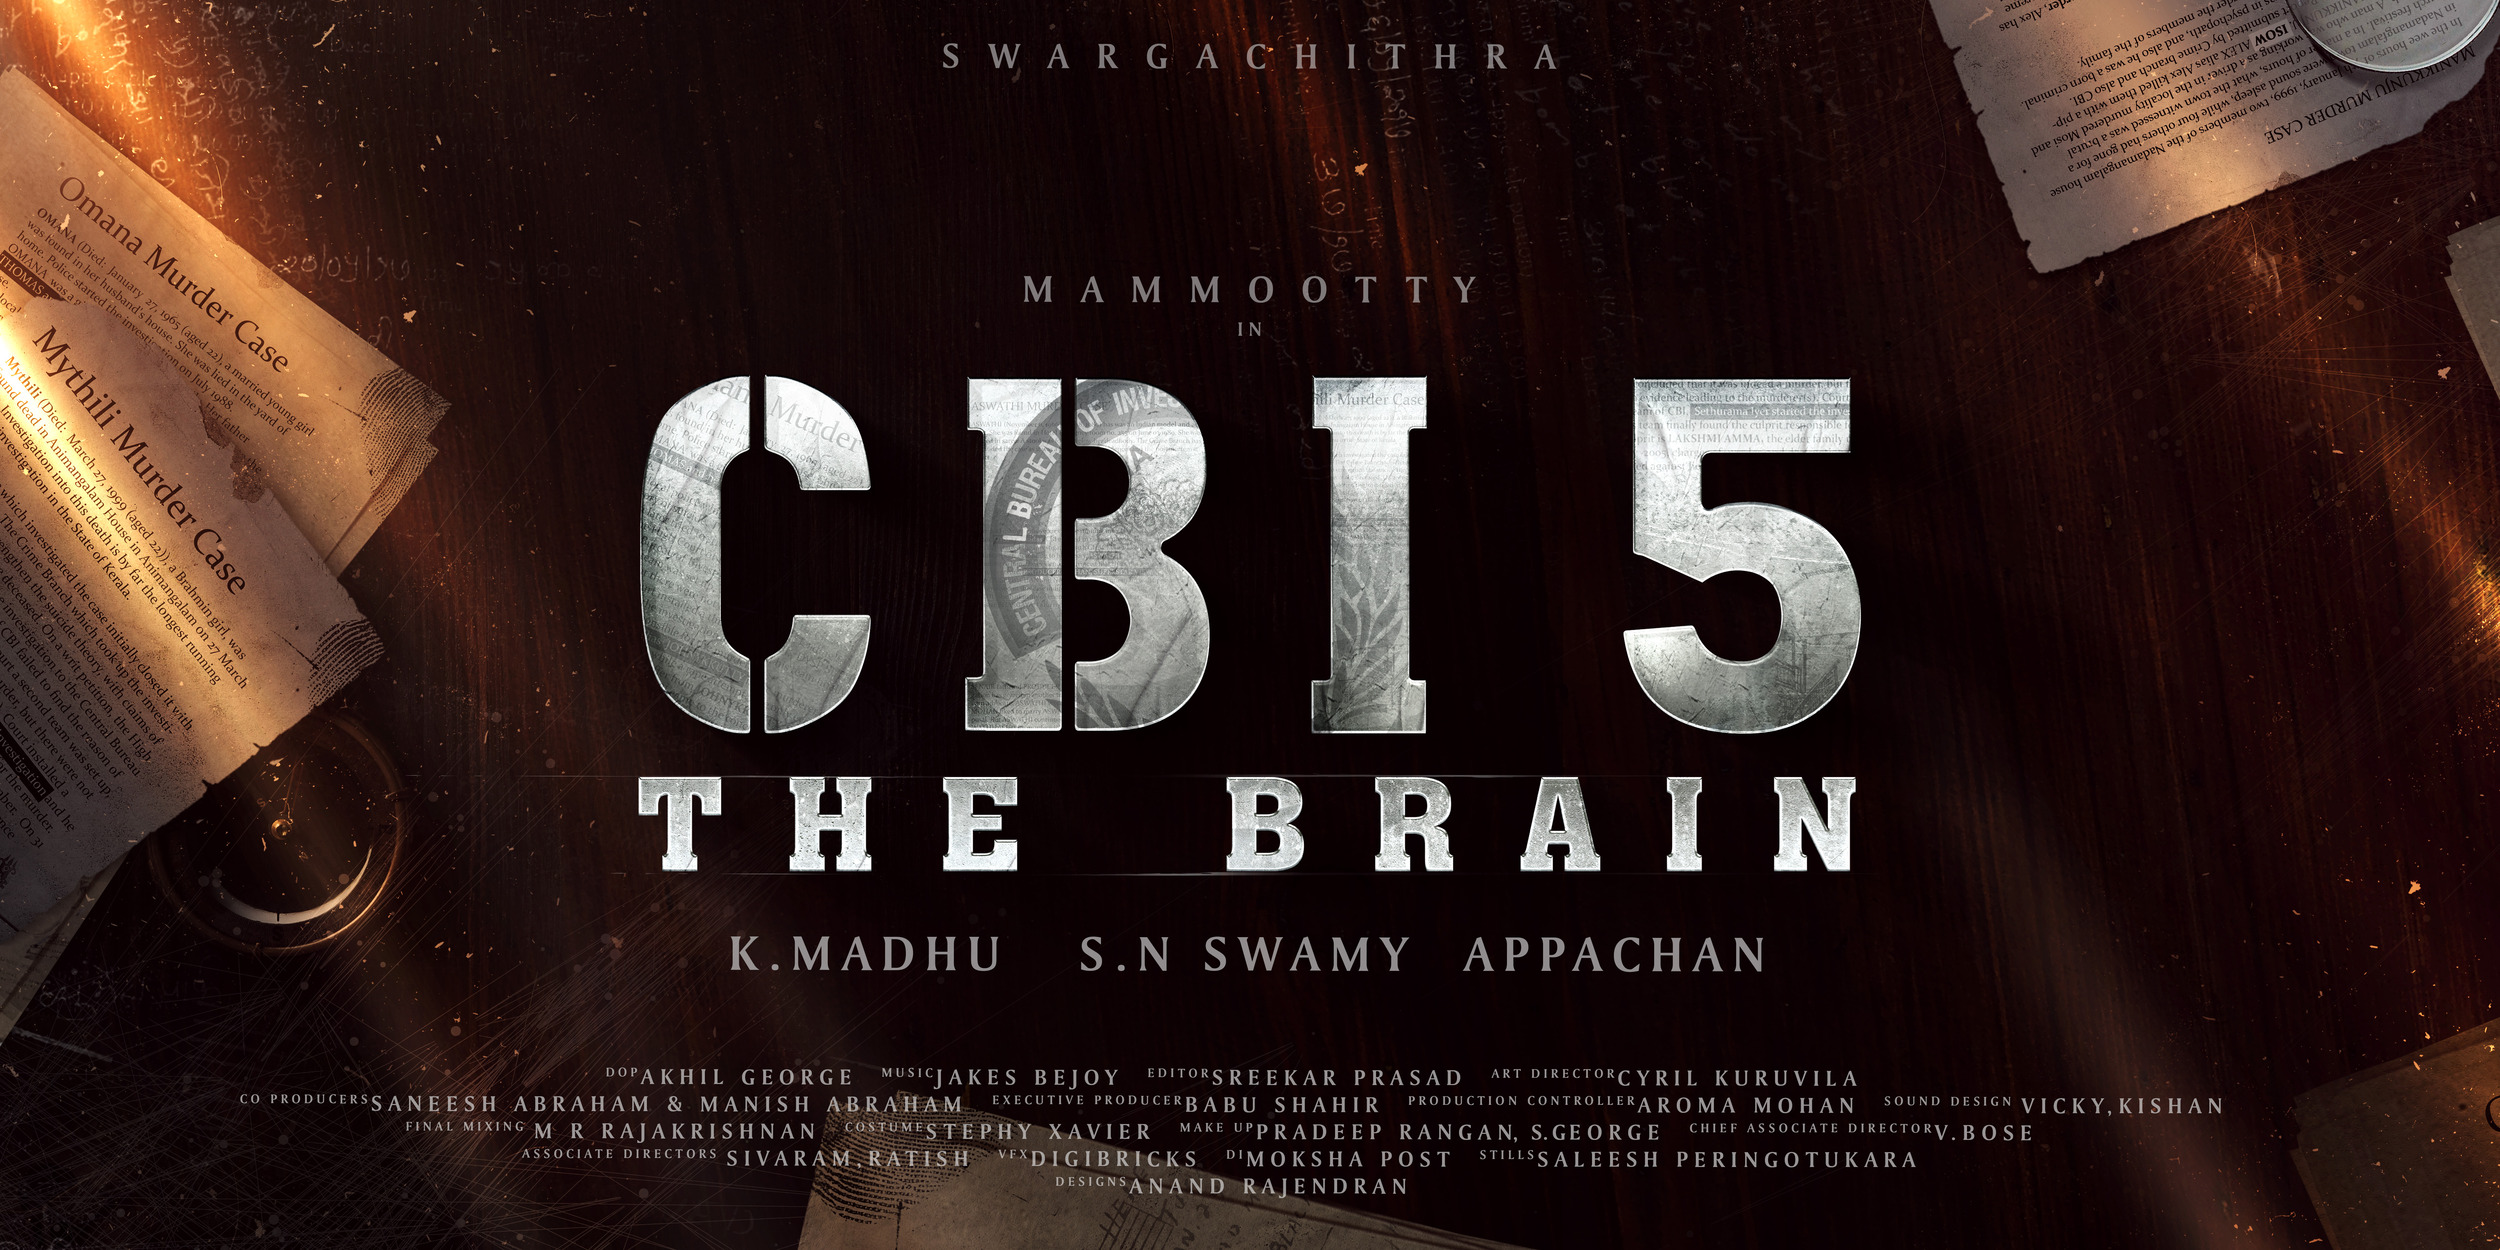 Mega Sized Movie Poster Image for CBI 5 